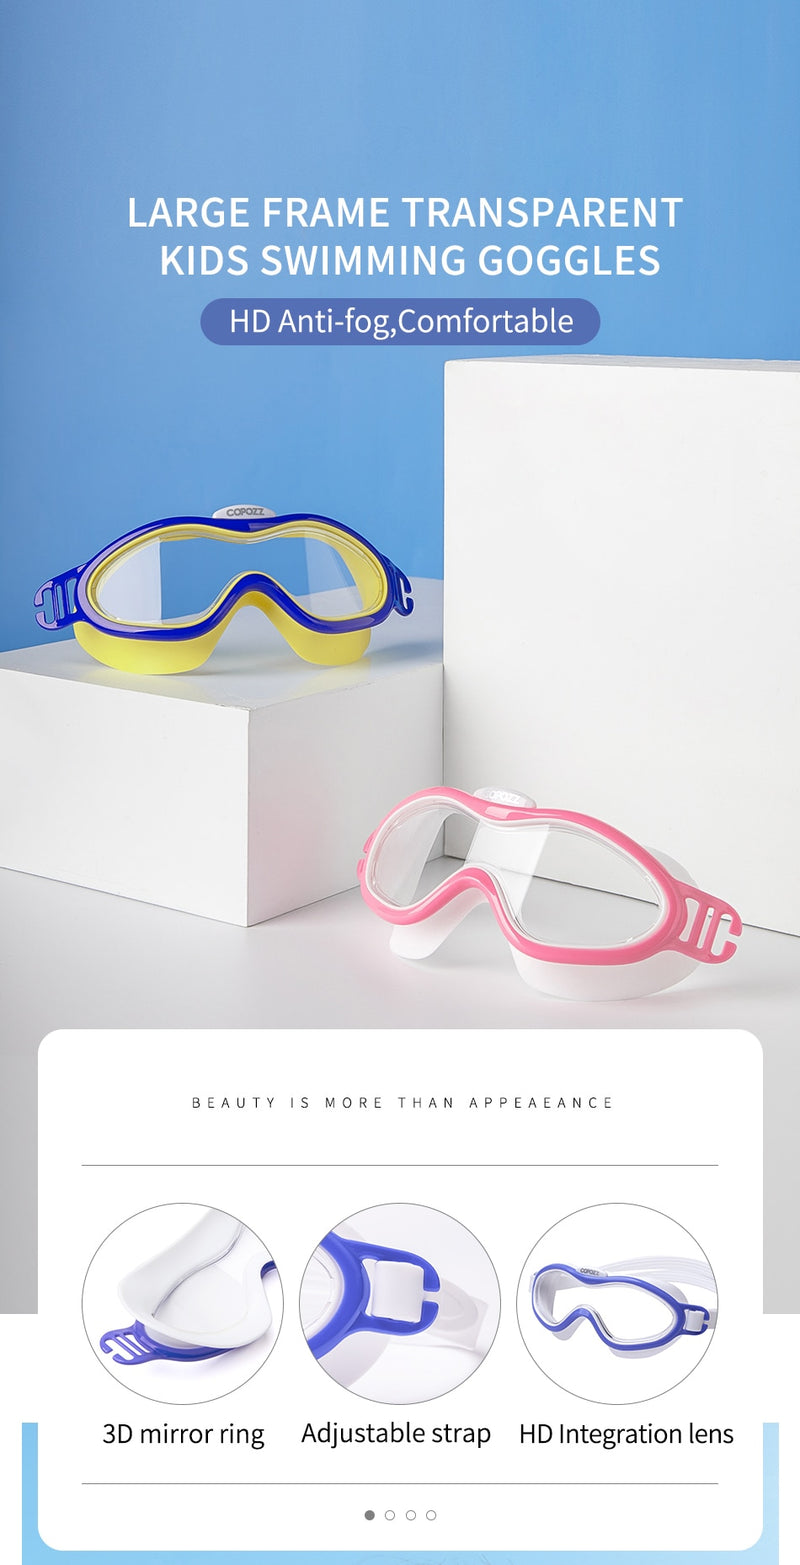 COPOZZ Kids Boy Girl Swim Goggles Anti Fog Big Frame Eyewear Waterproof - KiwisLove